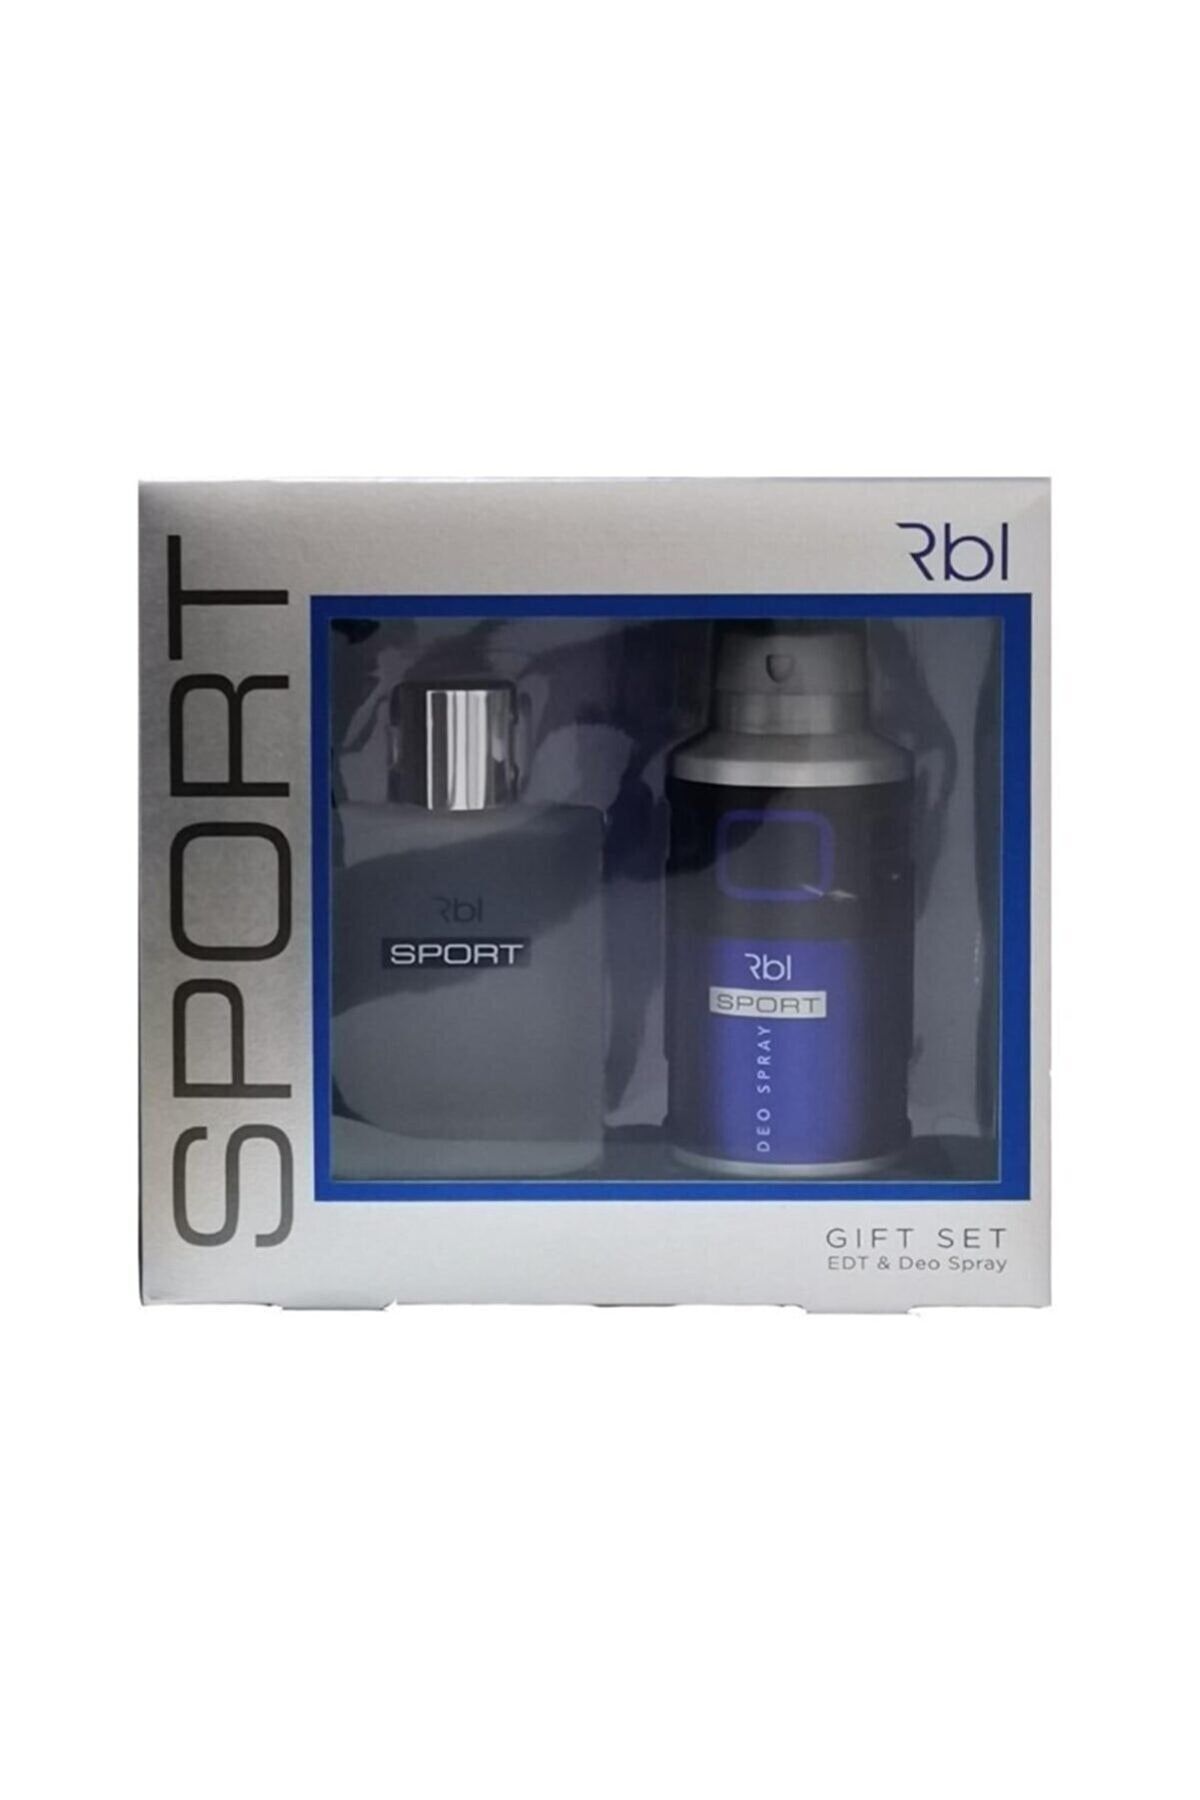 rbl Rebul Sport Erkek Parfüm 90ml + Deodorant Spray 150ml 546